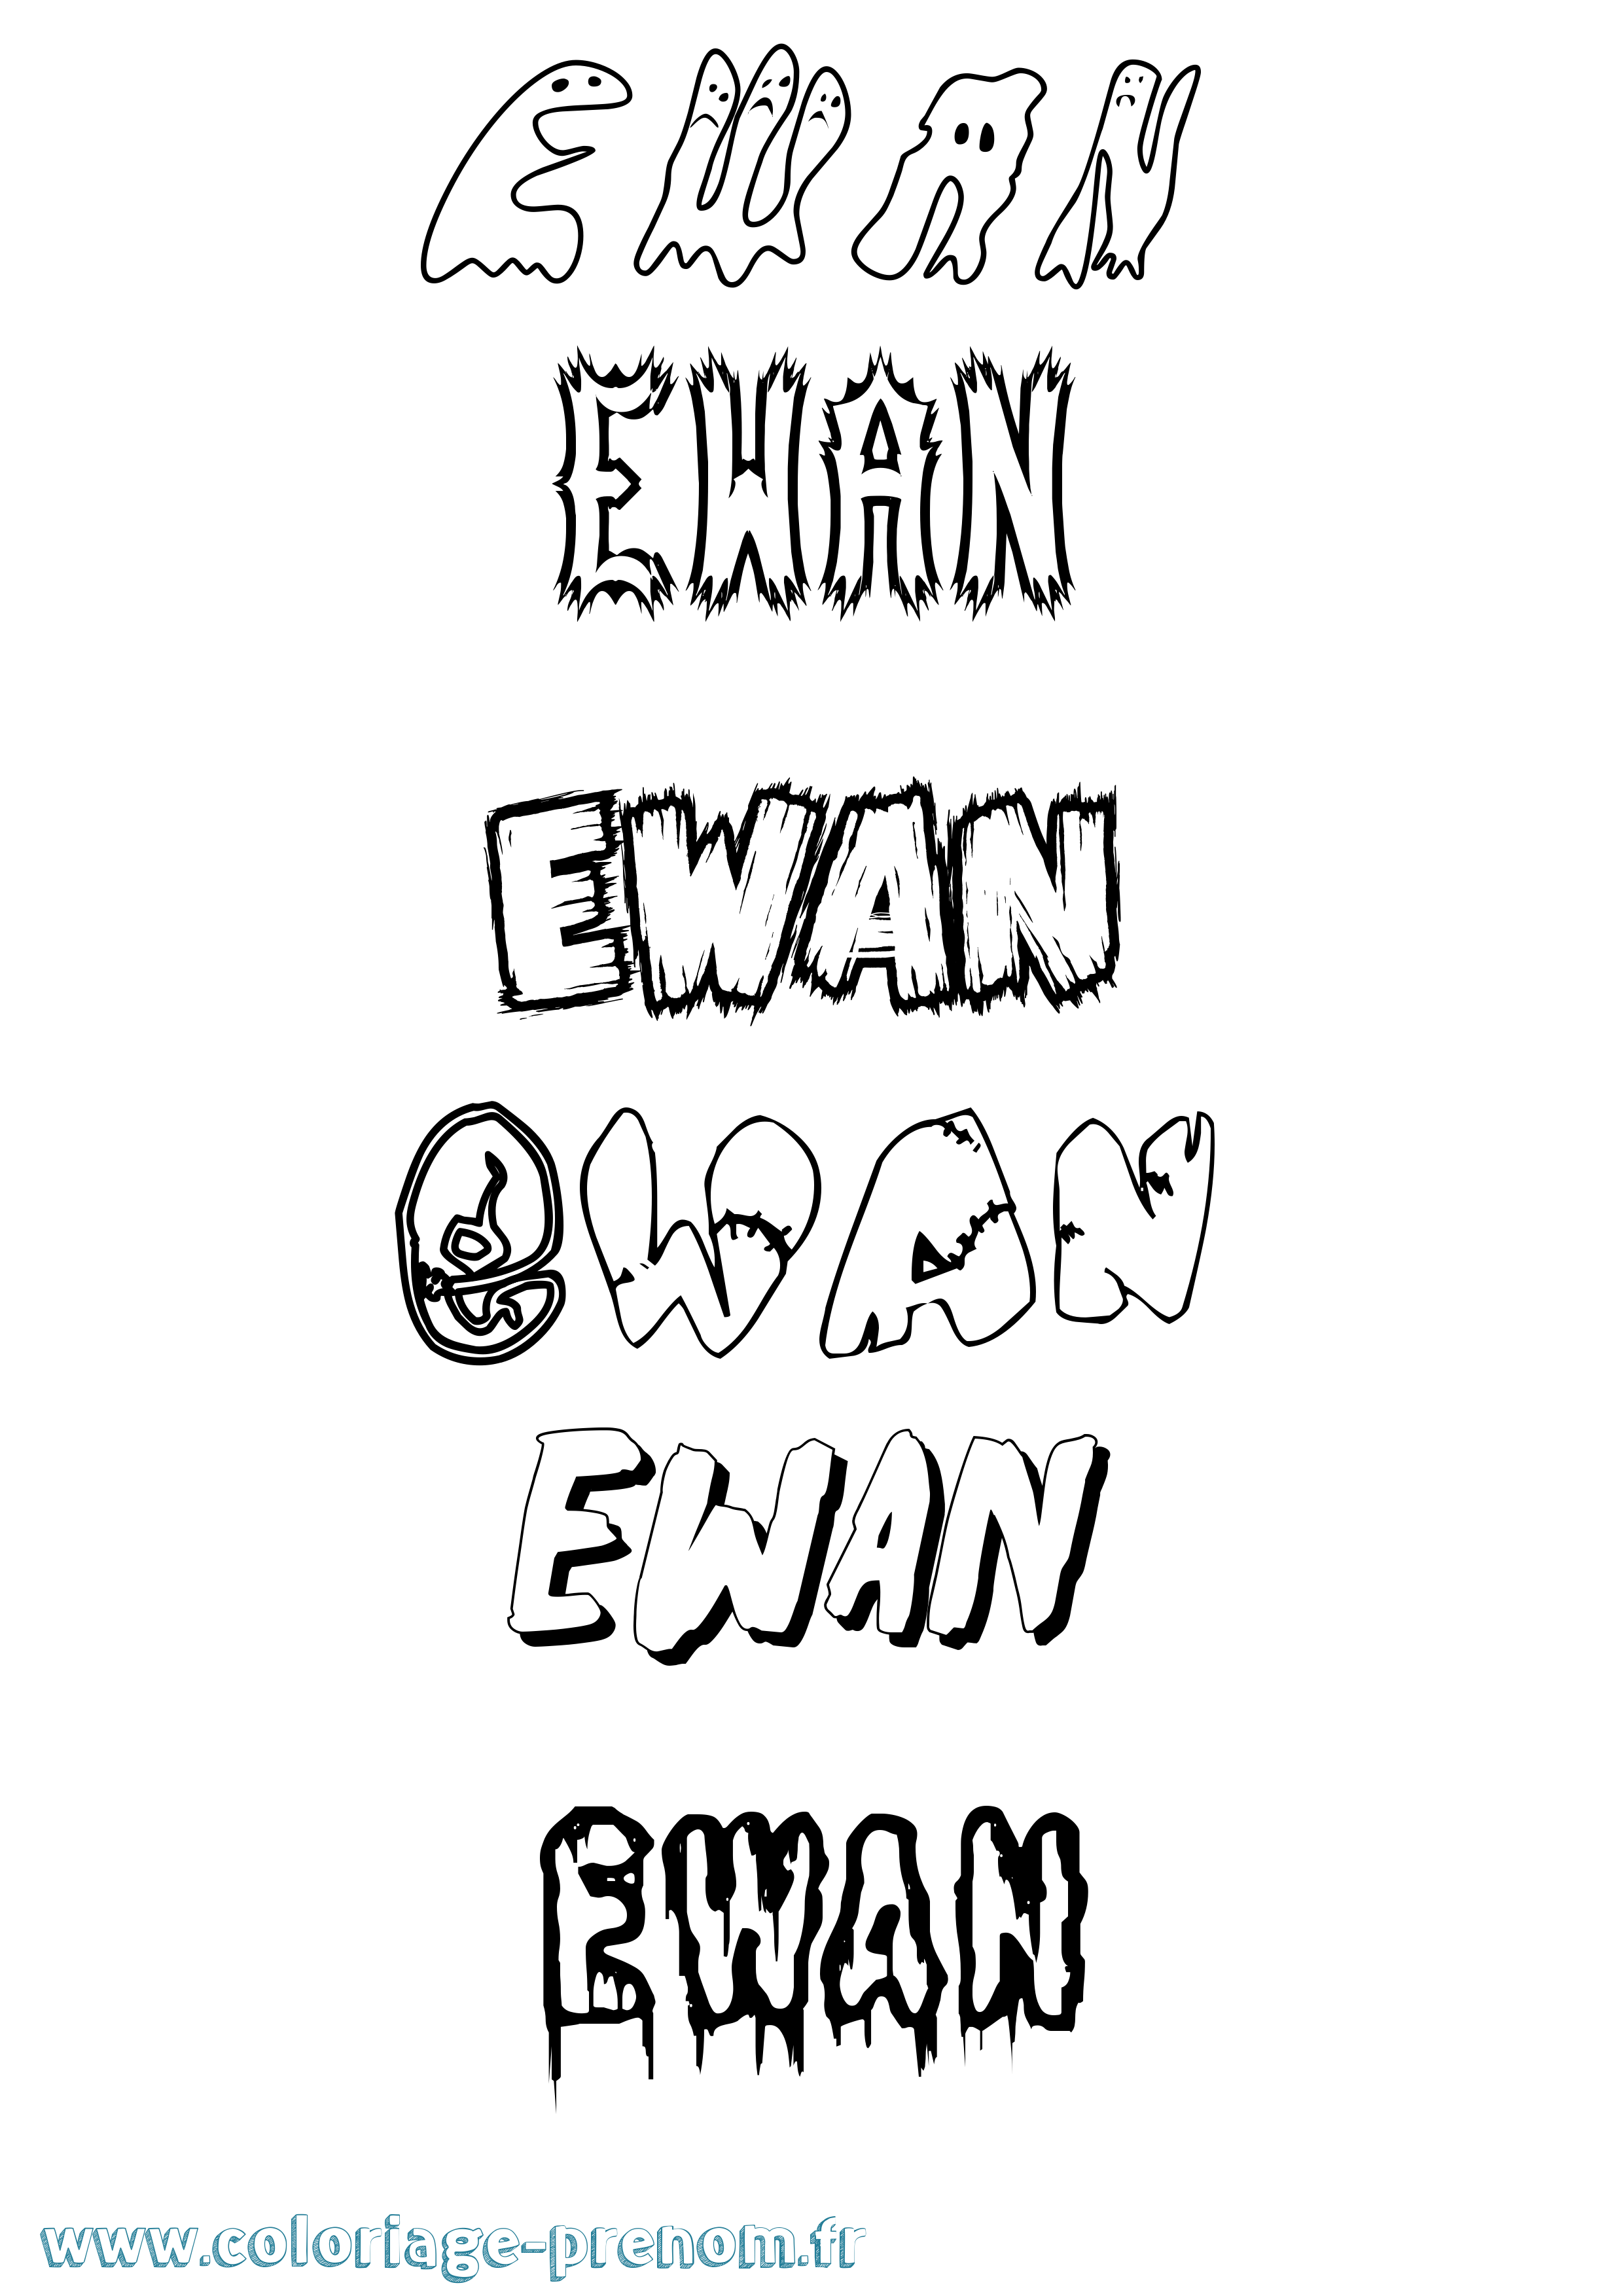 Coloriage prénom Ewan Frisson